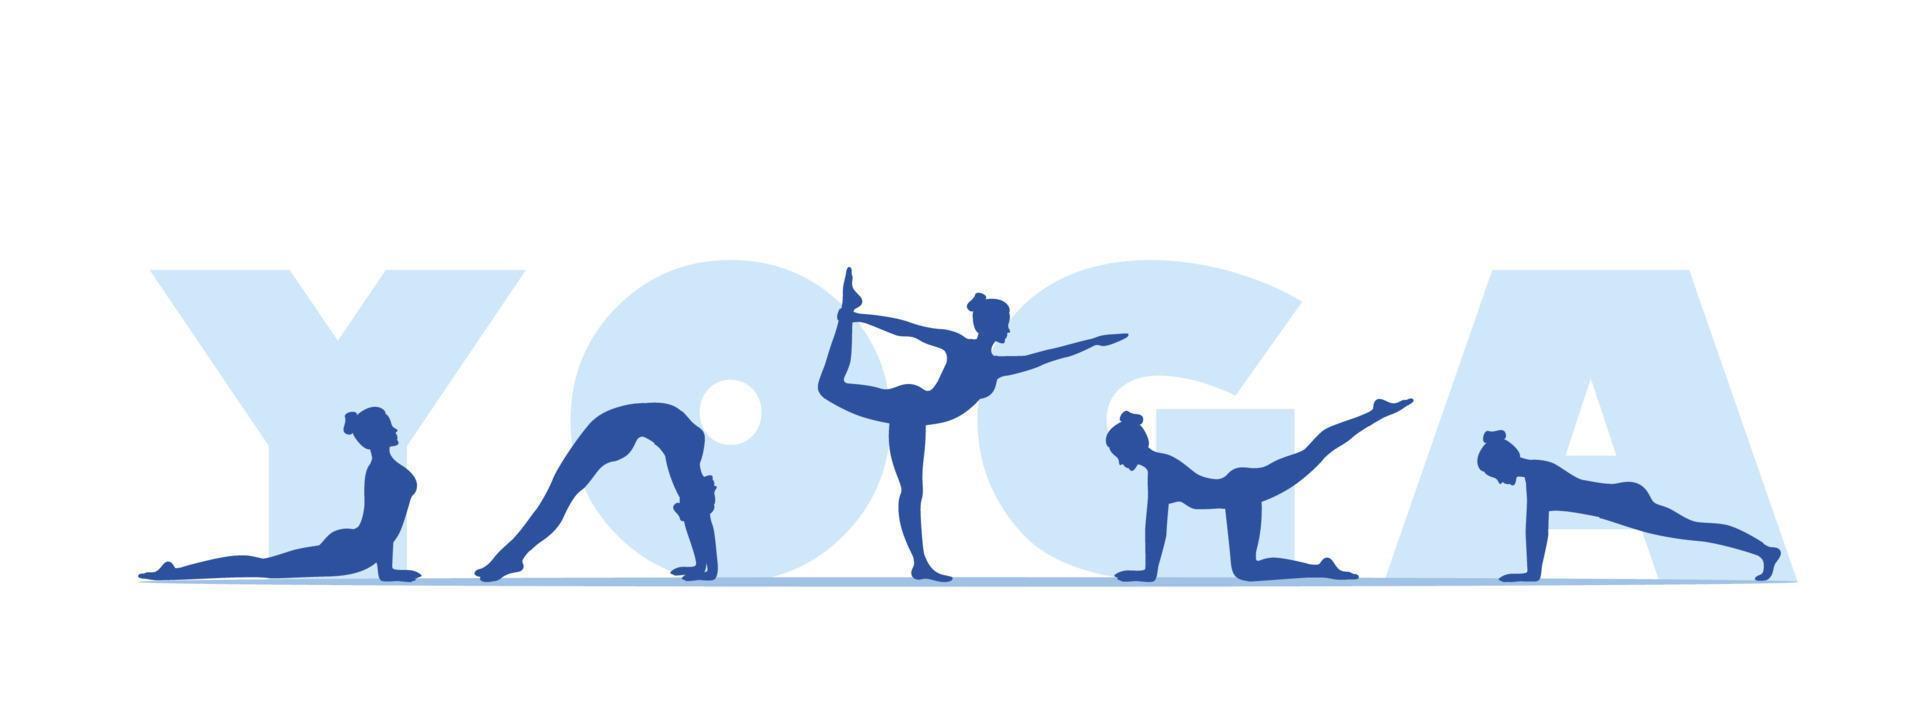 Internationaler Yoga-Tag. Yoga-Körperhaltung. Yoga-Posen. Wellness-Training in flacher Vektorgrafik. vektor